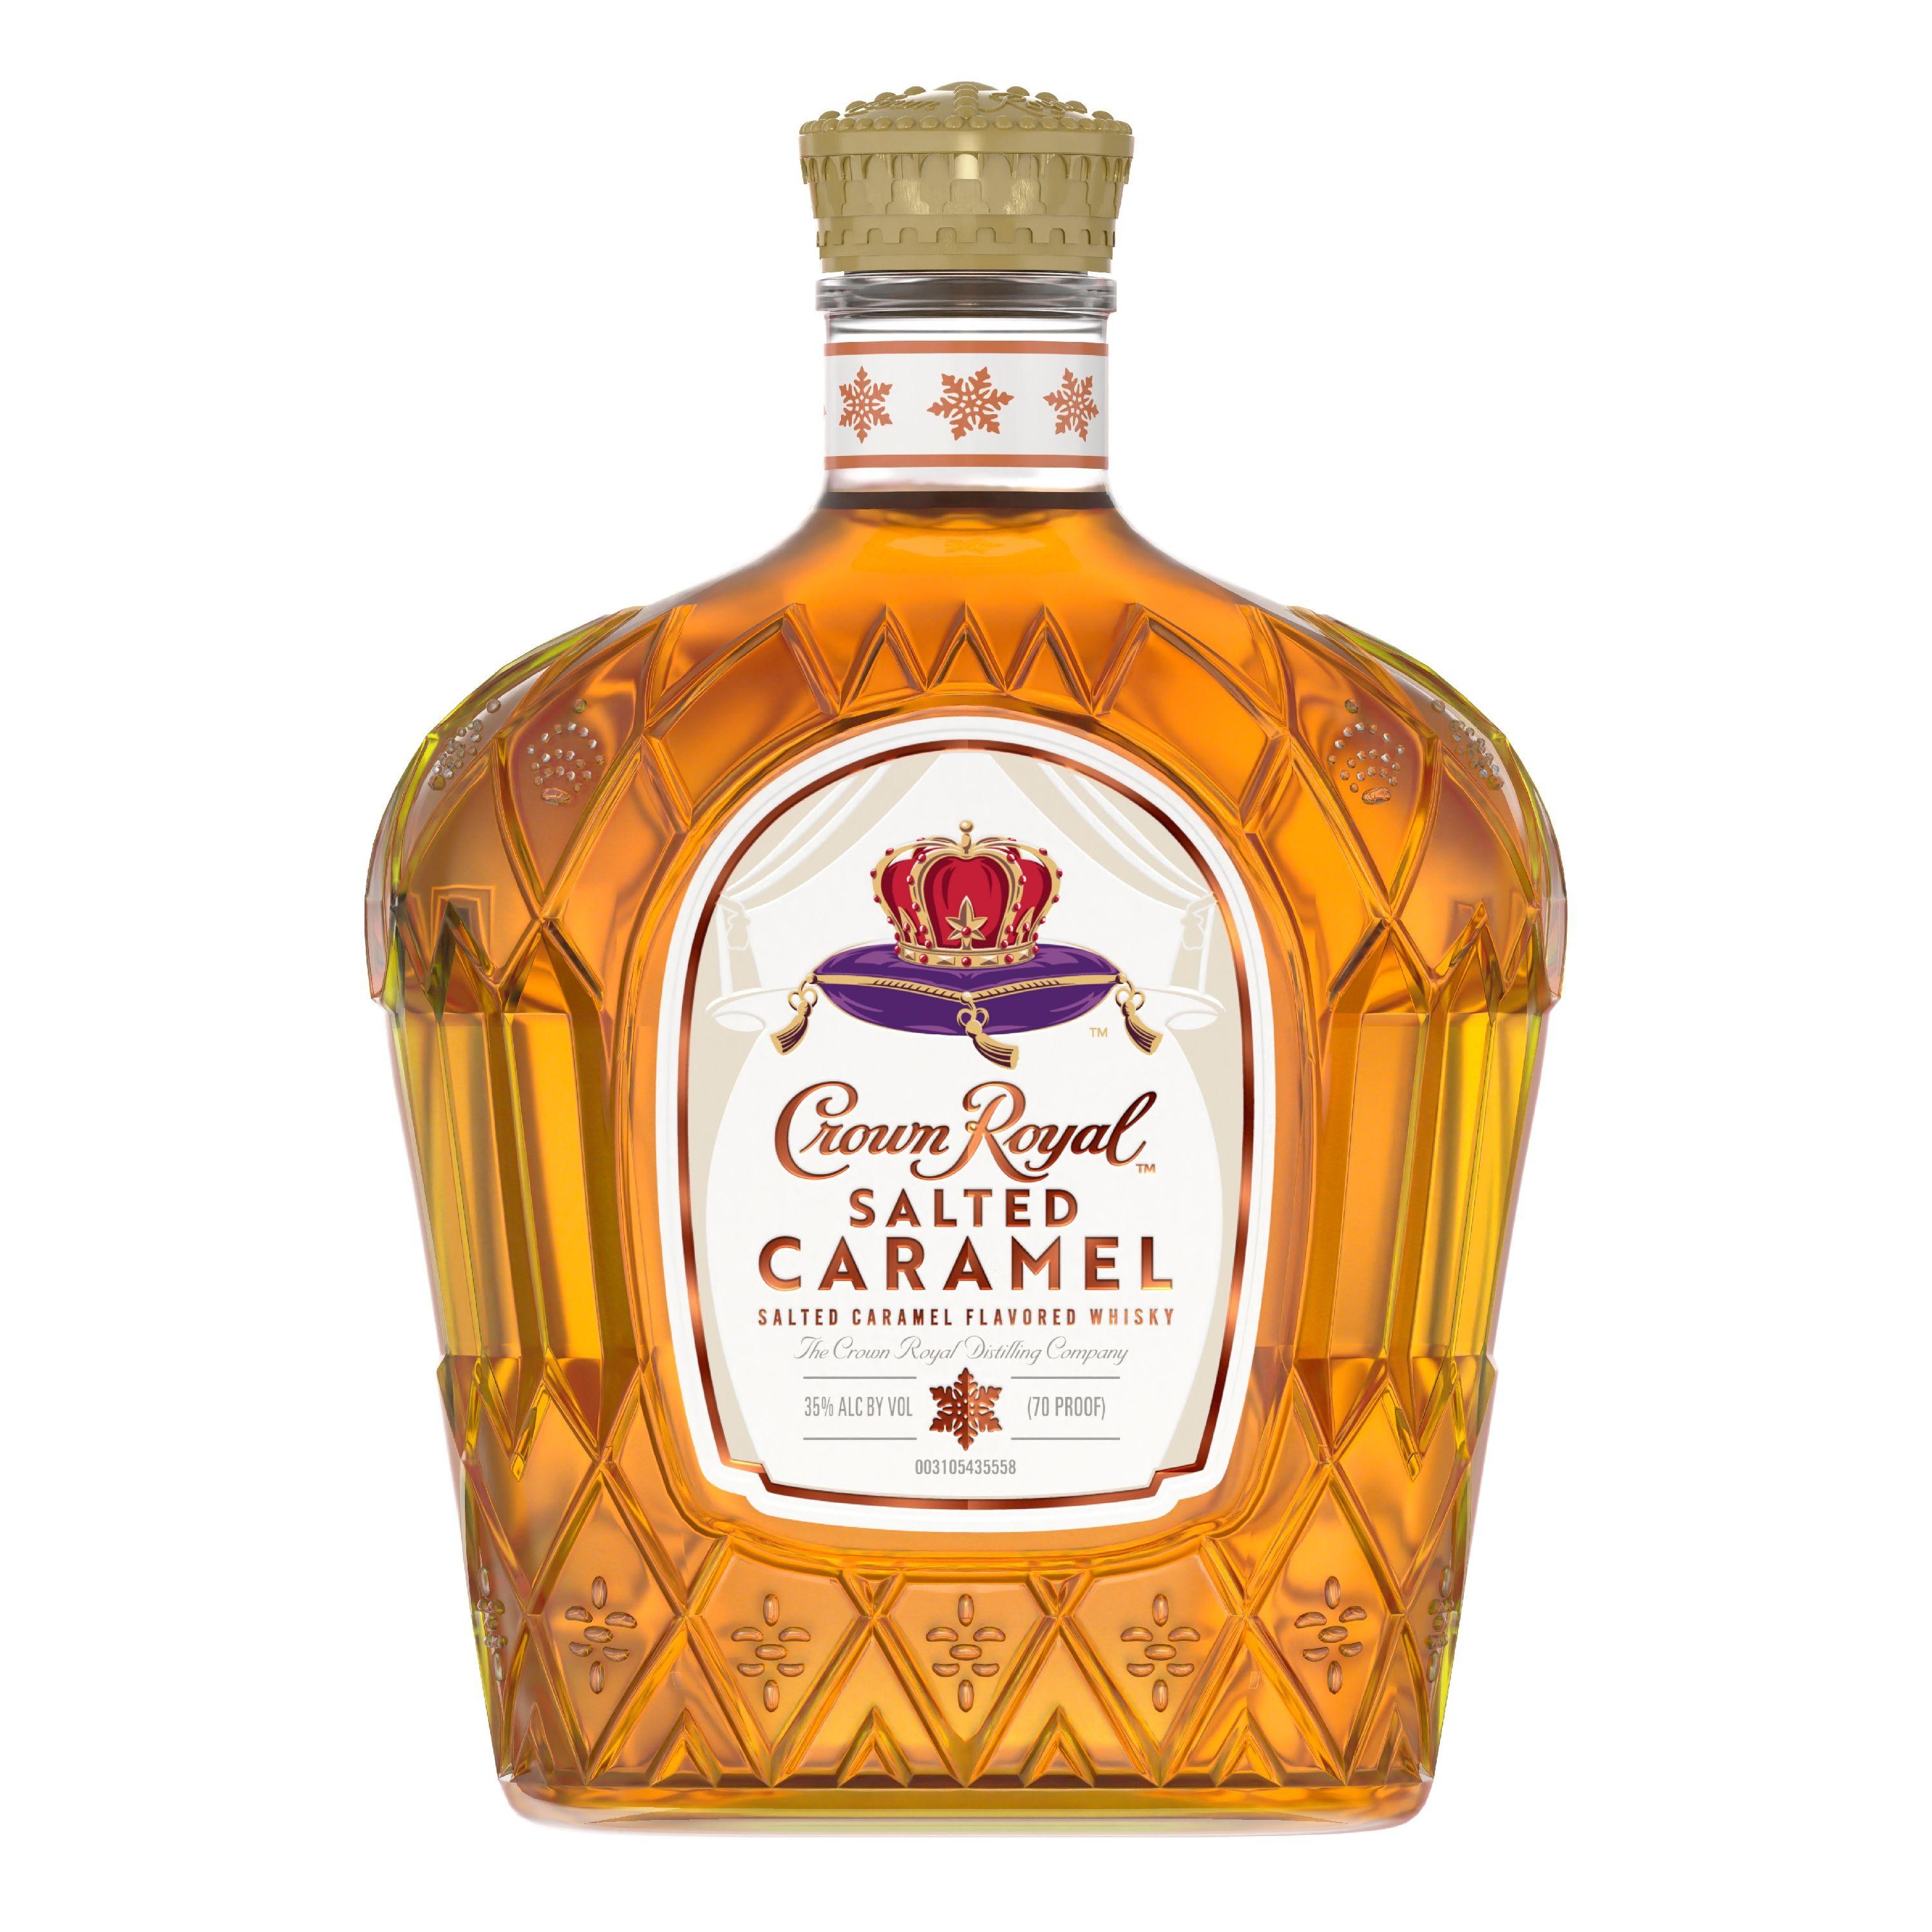 Crown Royal Salted Caramel Flavored Whisky - 750ml Bottle